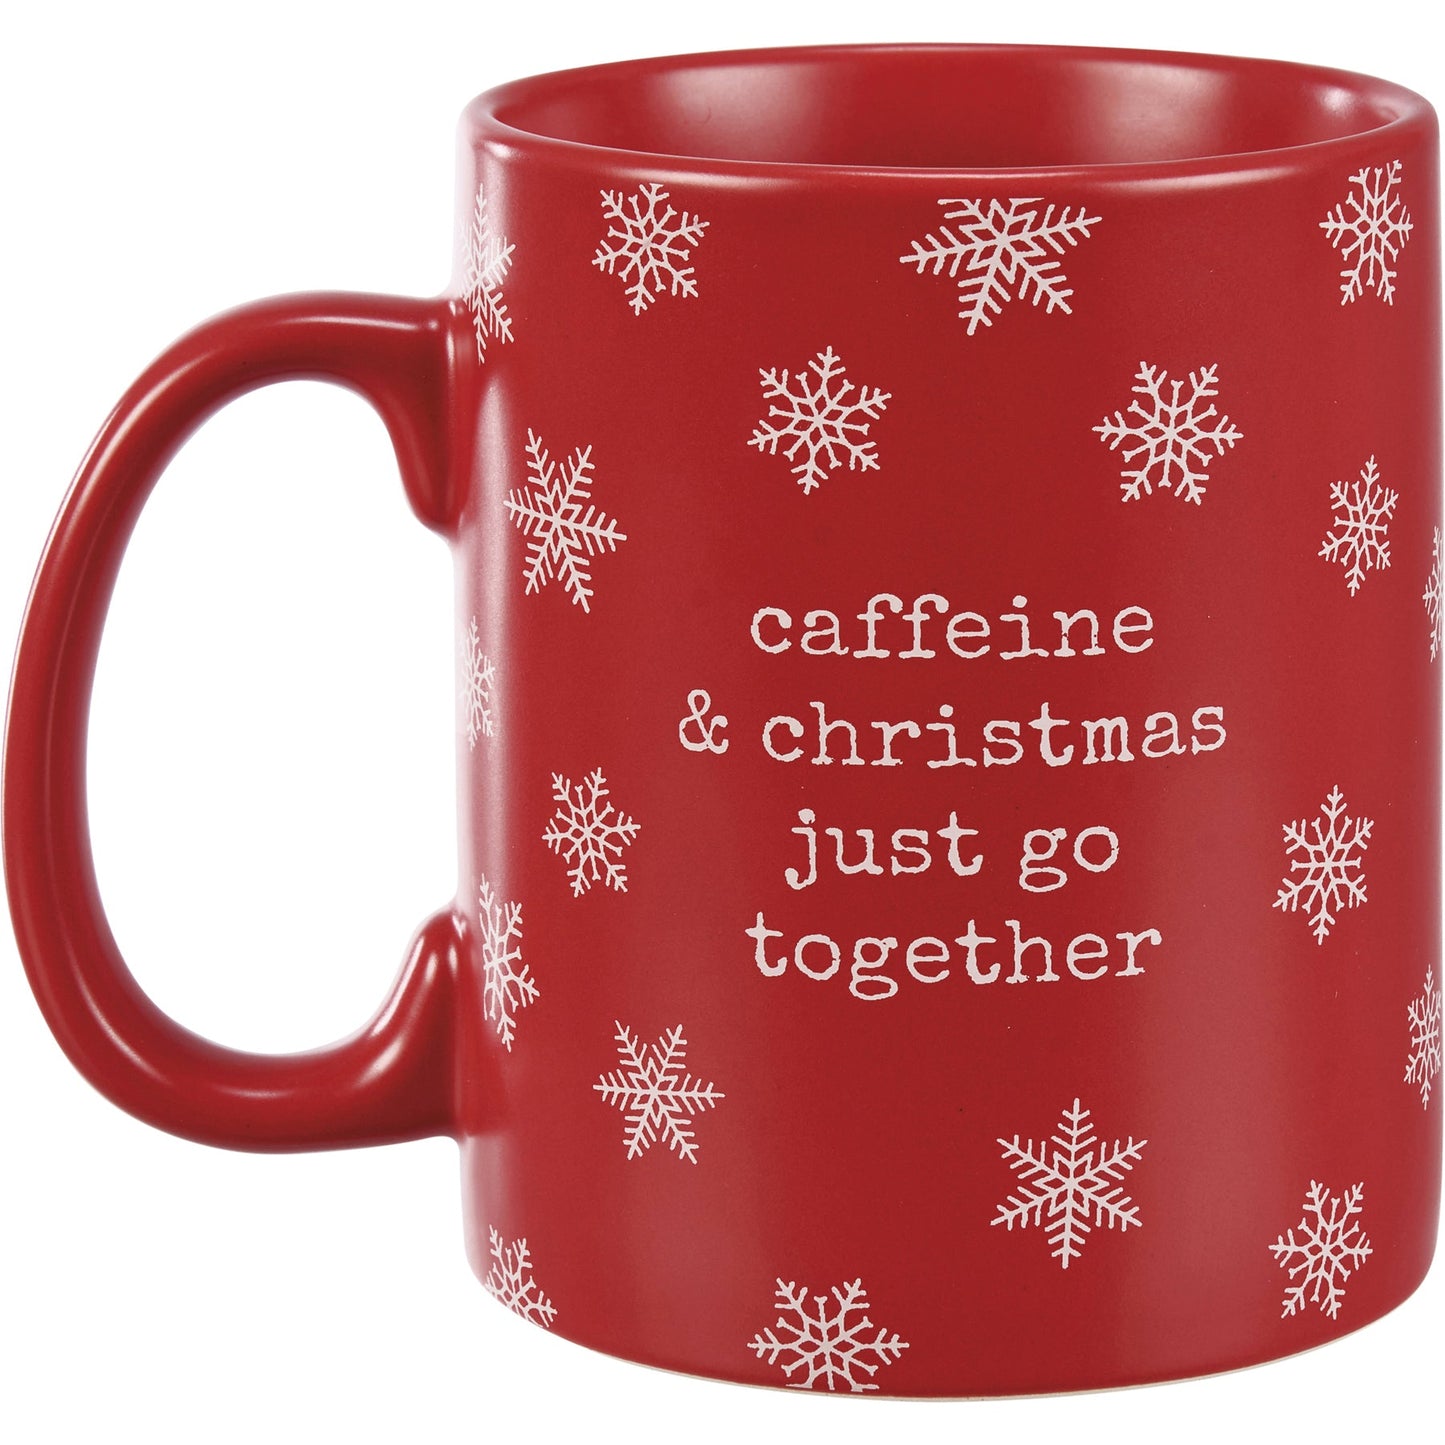 Caffeine And Christmas Just Go Together Coffee Mug | Holds 20 oz.